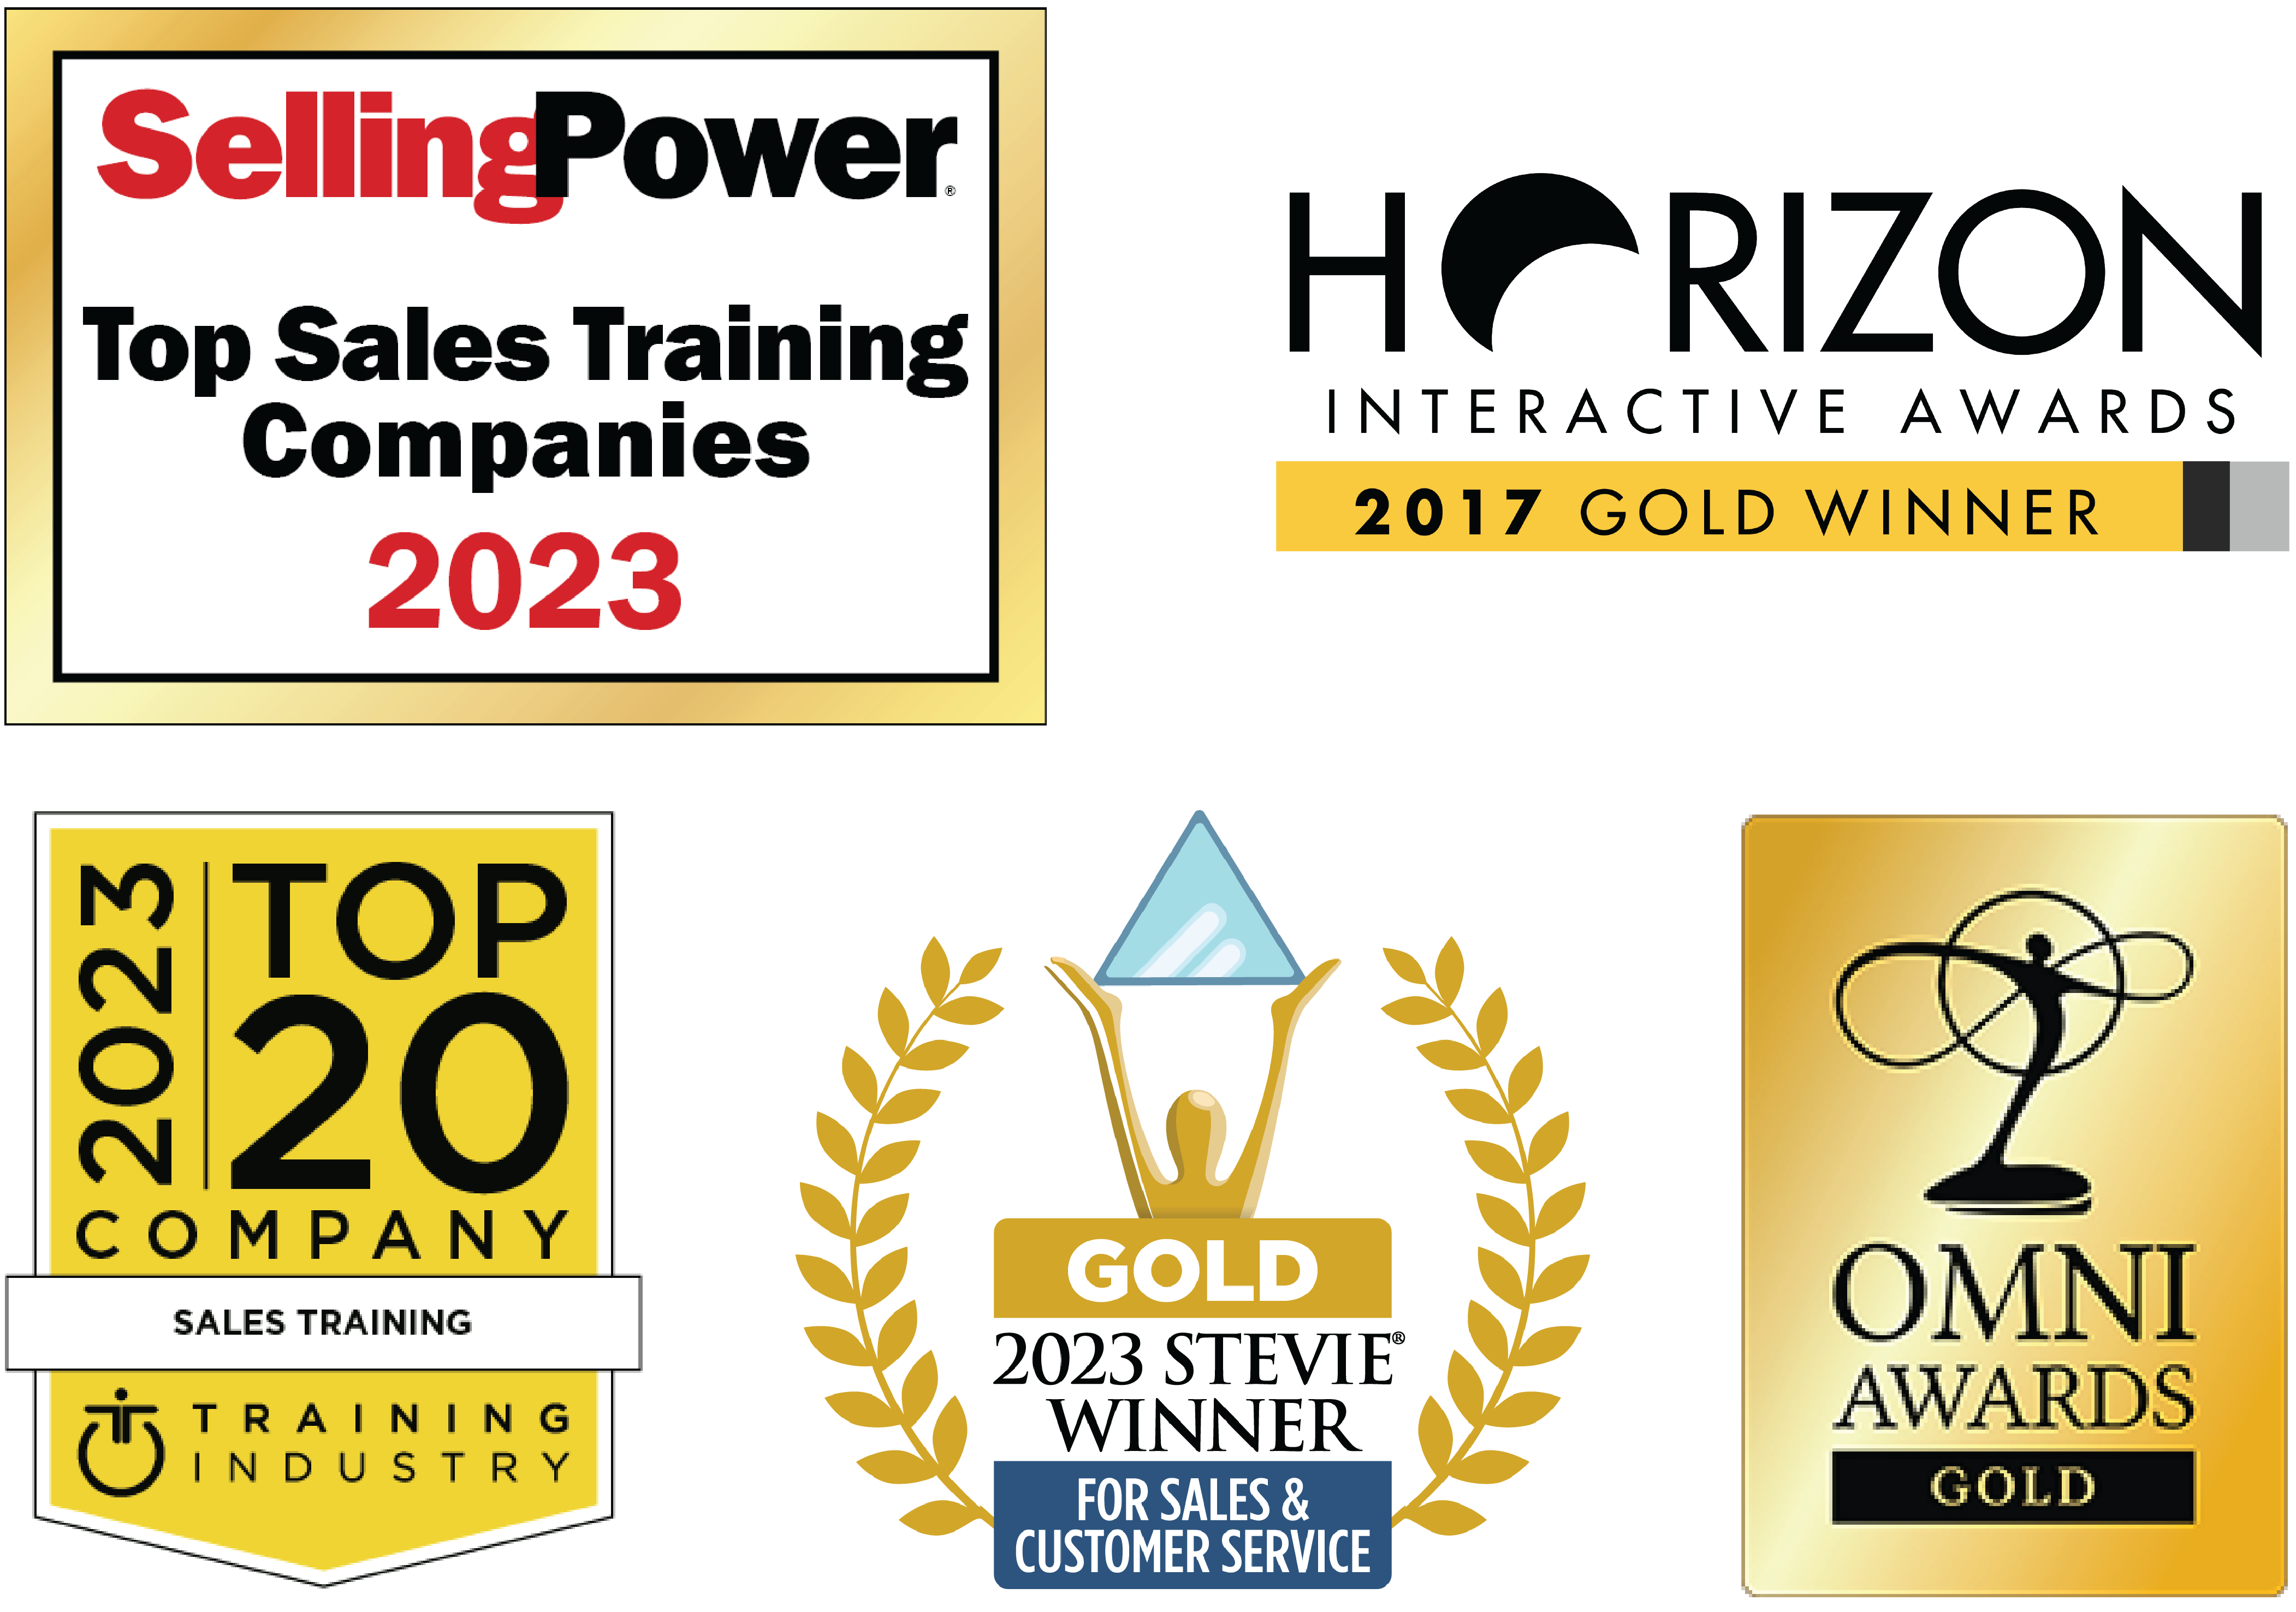 Award-winning sales training company